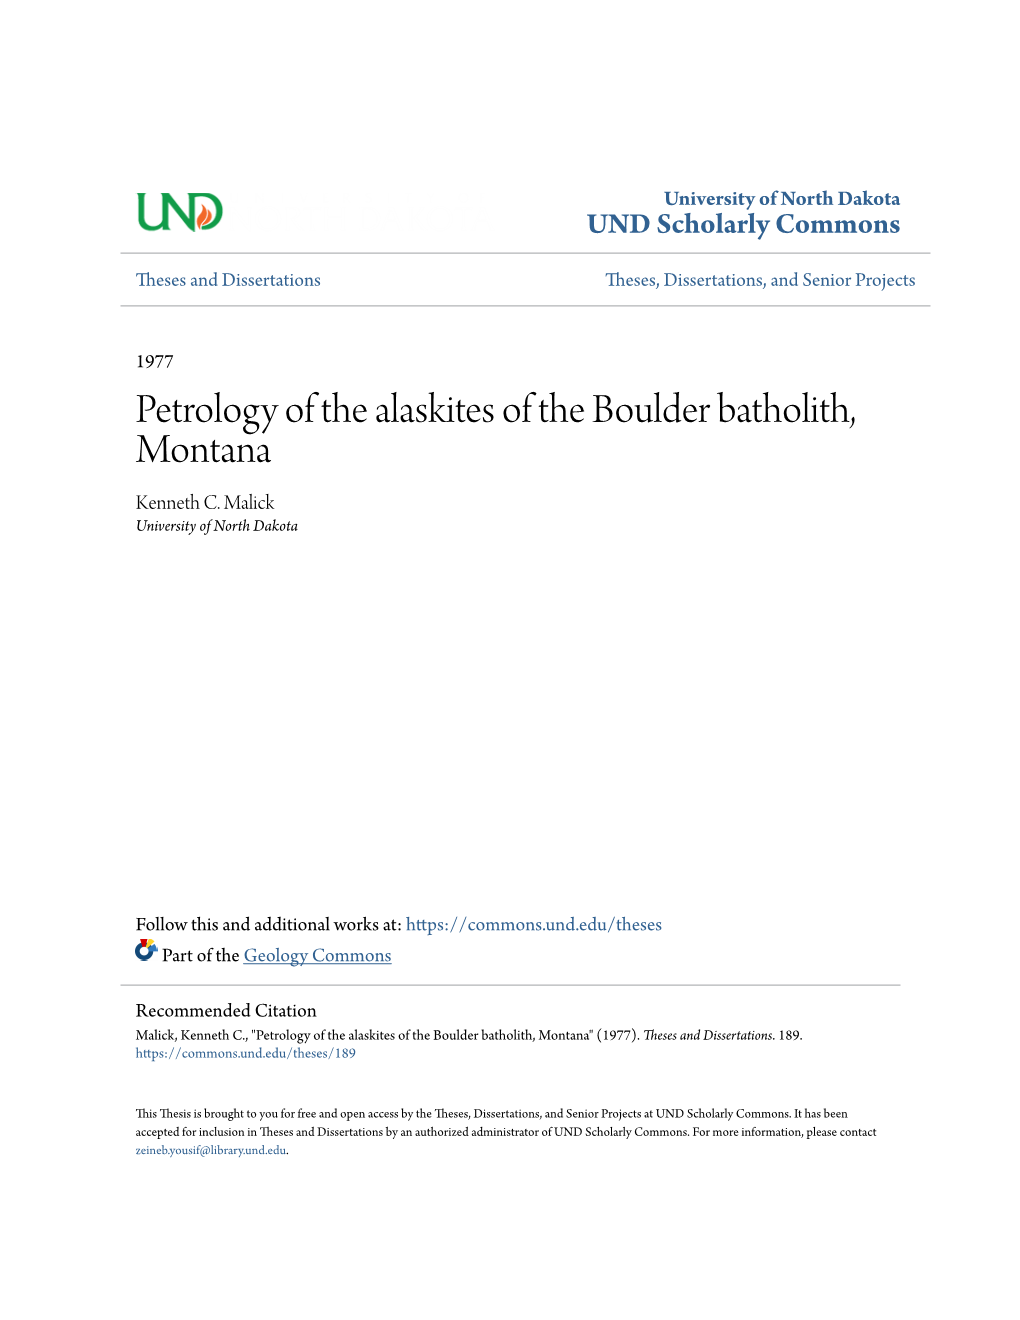 Petrology of the Alaskites of the Boulder Batholith, Montana Kenneth C